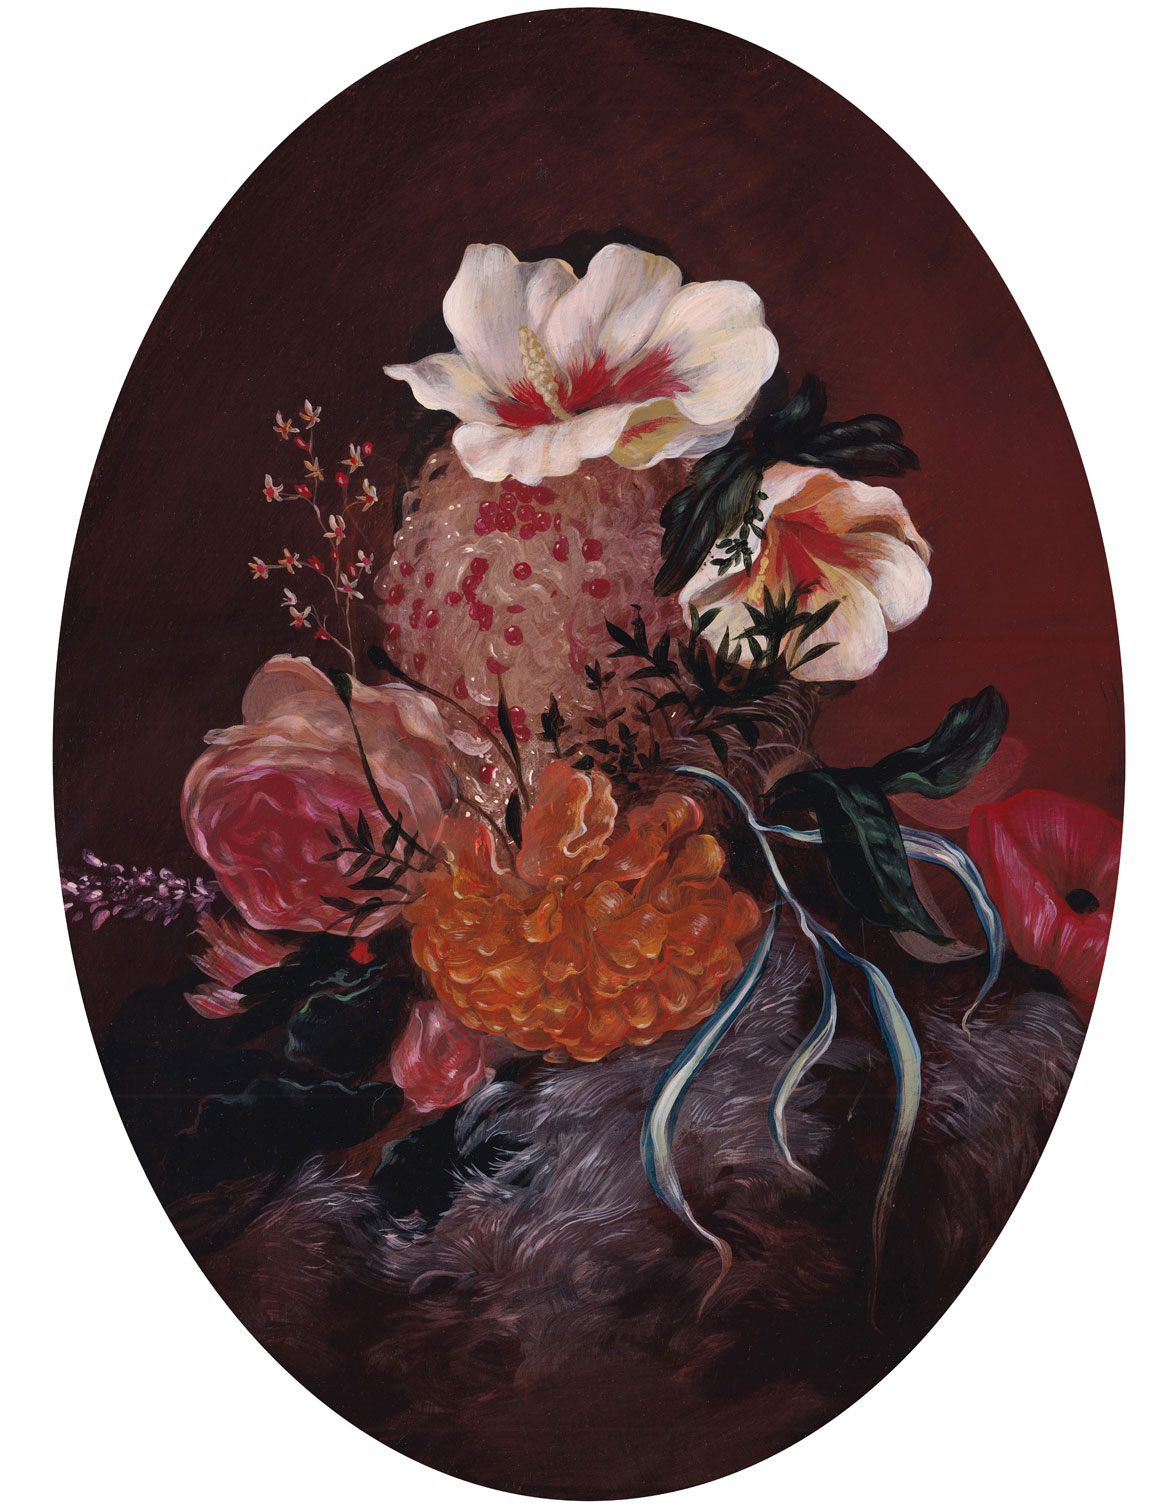 Nicole Duennebier, "Flower Effigy (1)," acrylic on panel.